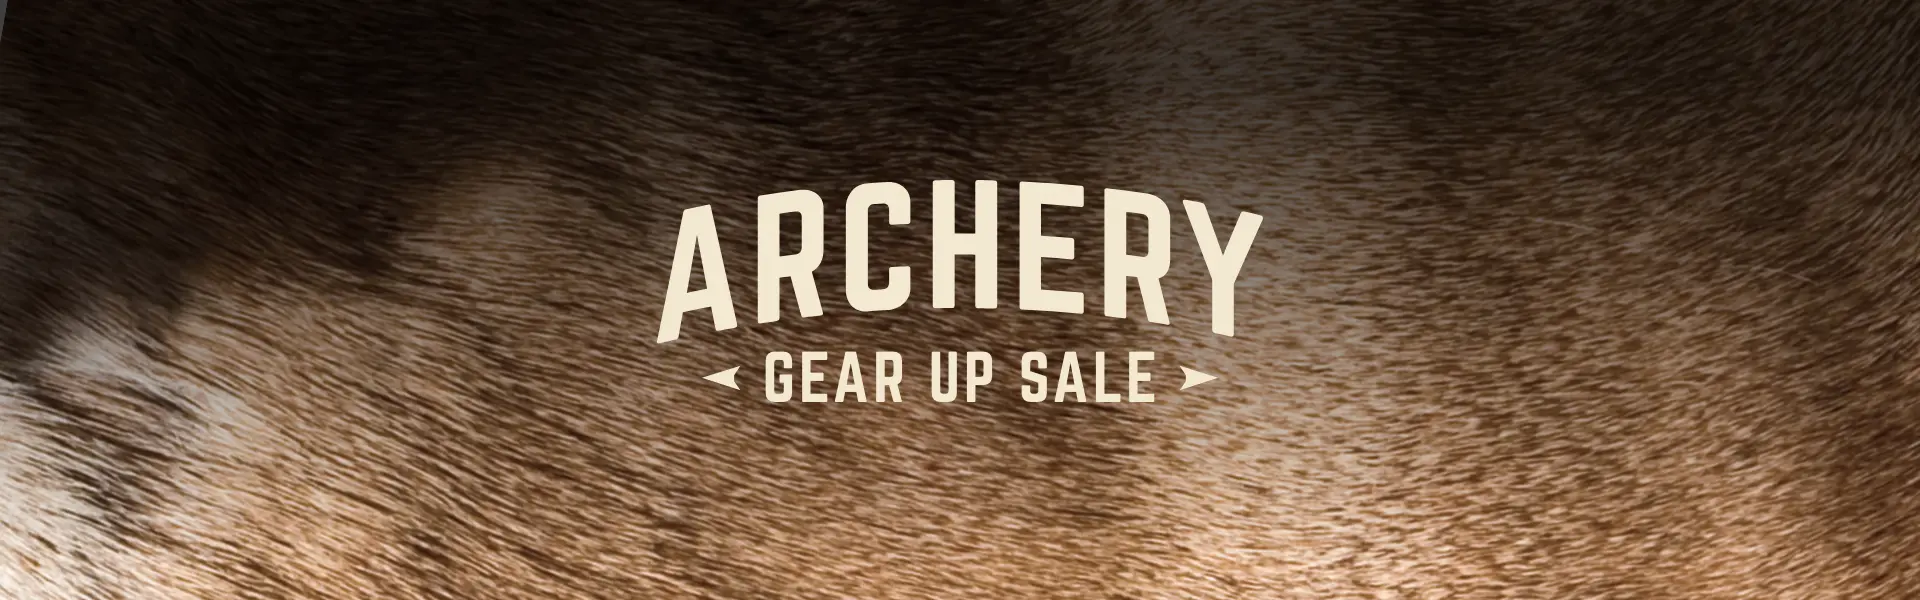 Archery Gear Up Sale